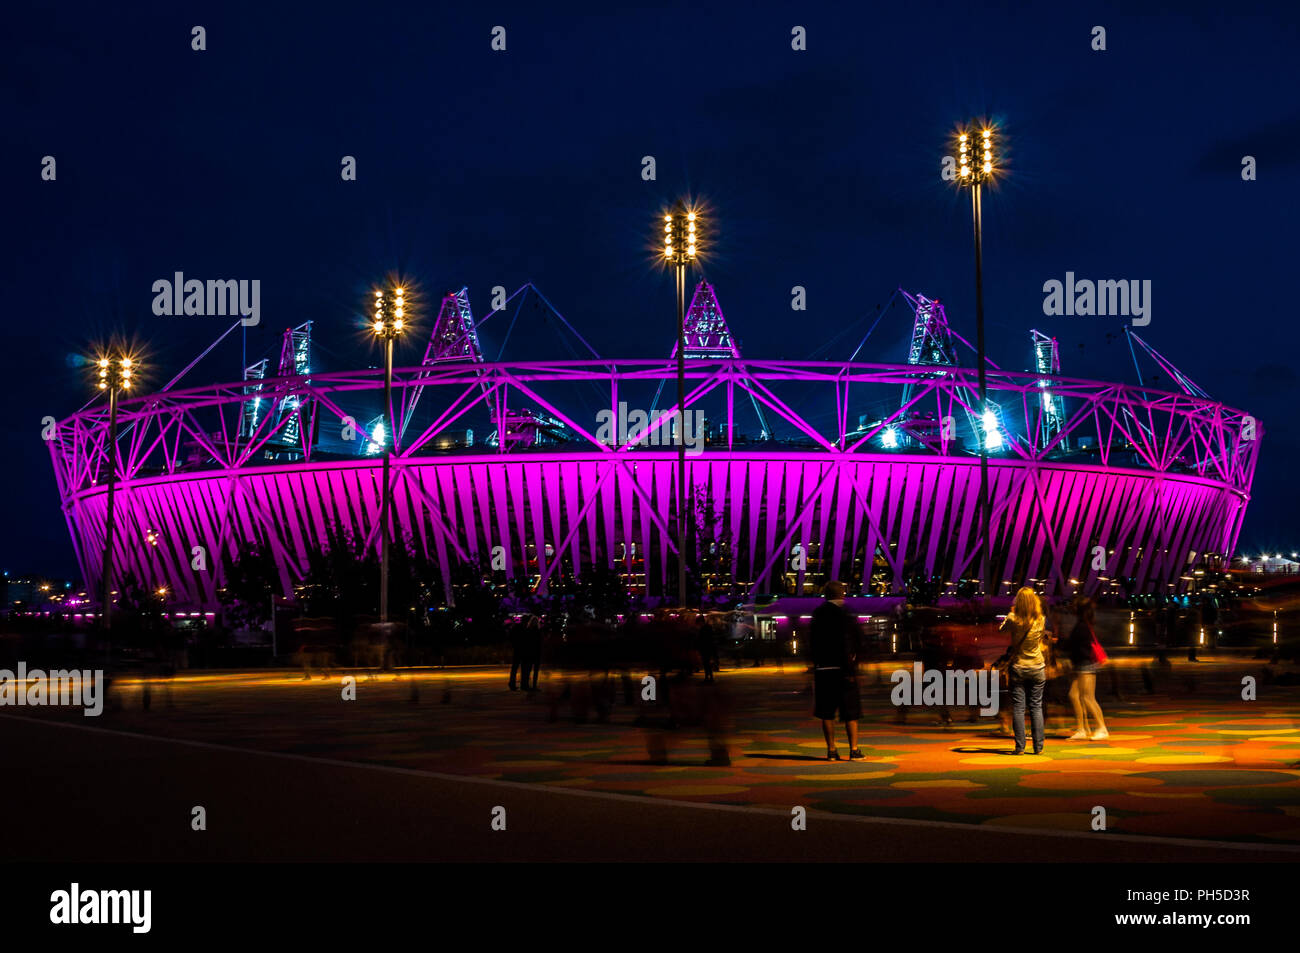 The Olympic Stadium at night - London 2012 Olympics Stock Photo